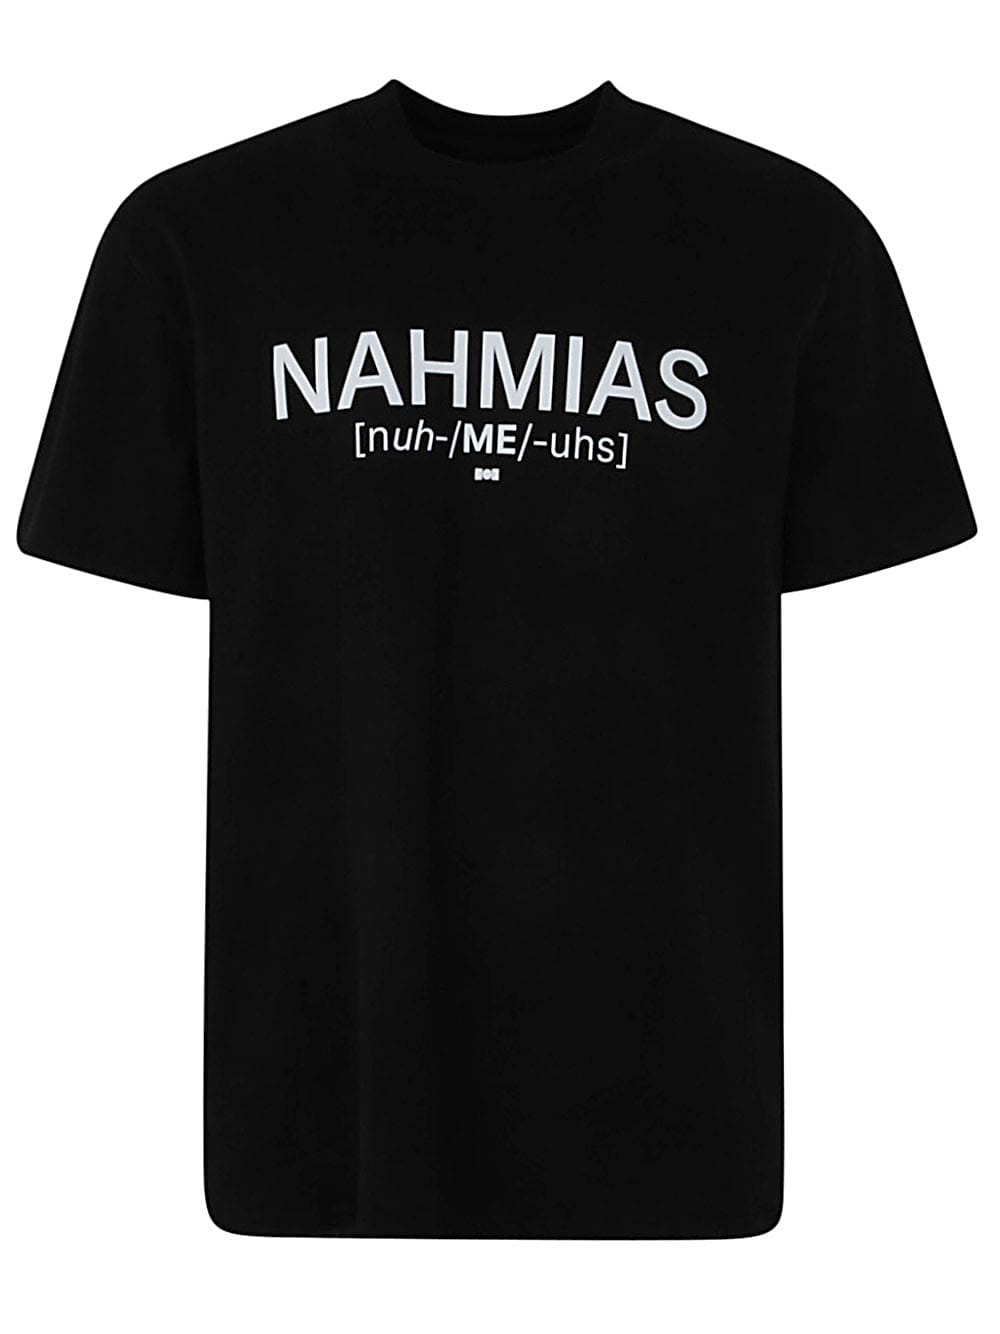 NAHMIAS PRONUNCIATION T-SHIRT